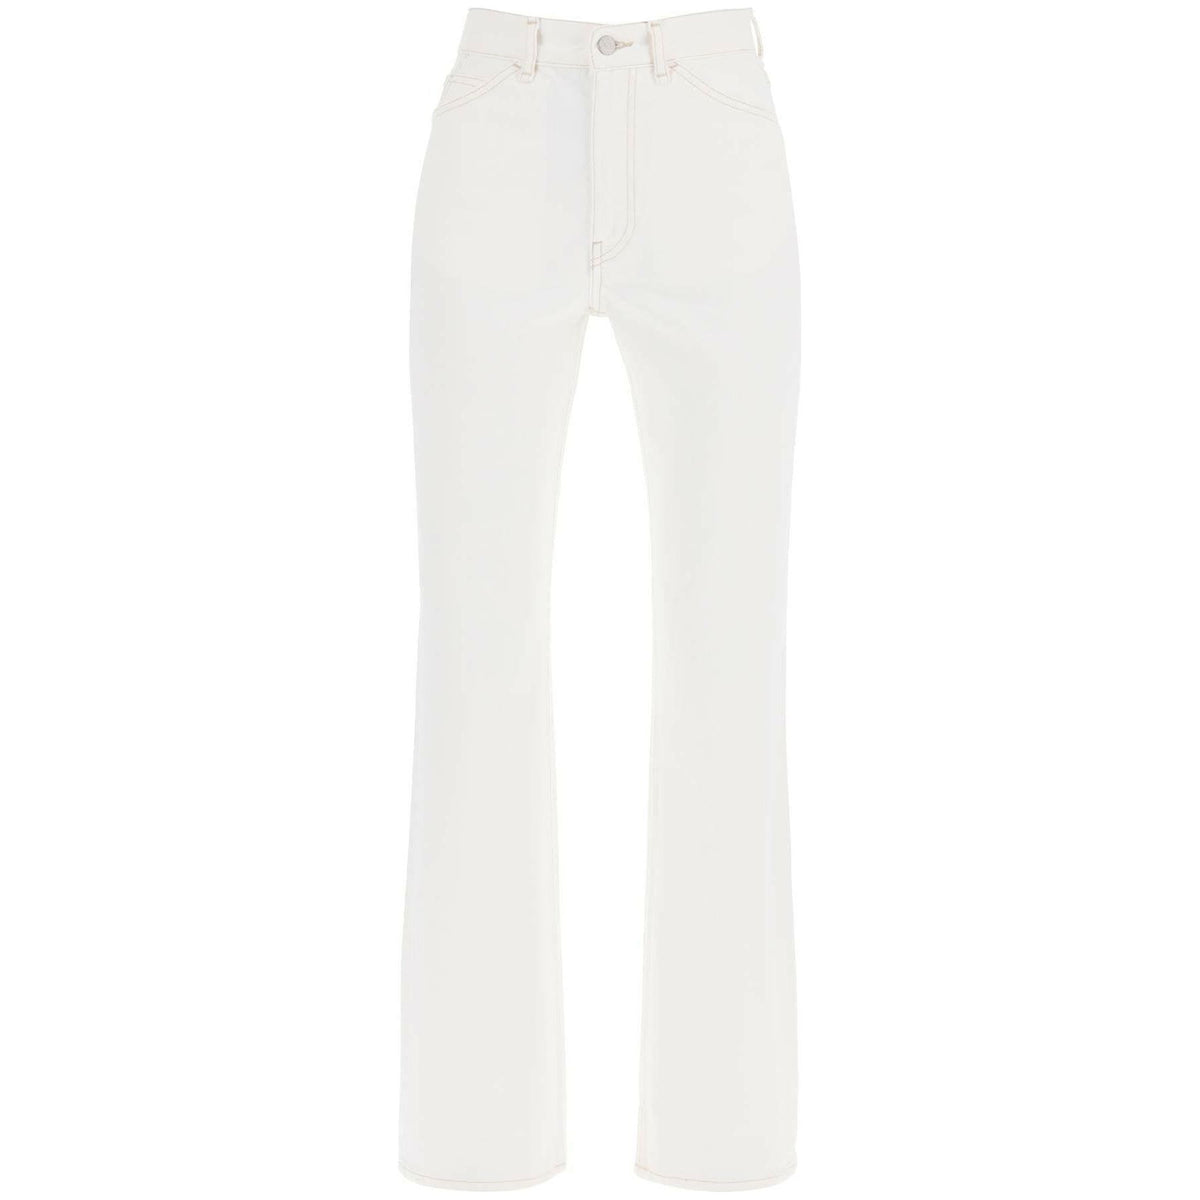 Off White 1977 Regular Fit Cotton Jeans ACNE STUDIOS JOHN JULIA.